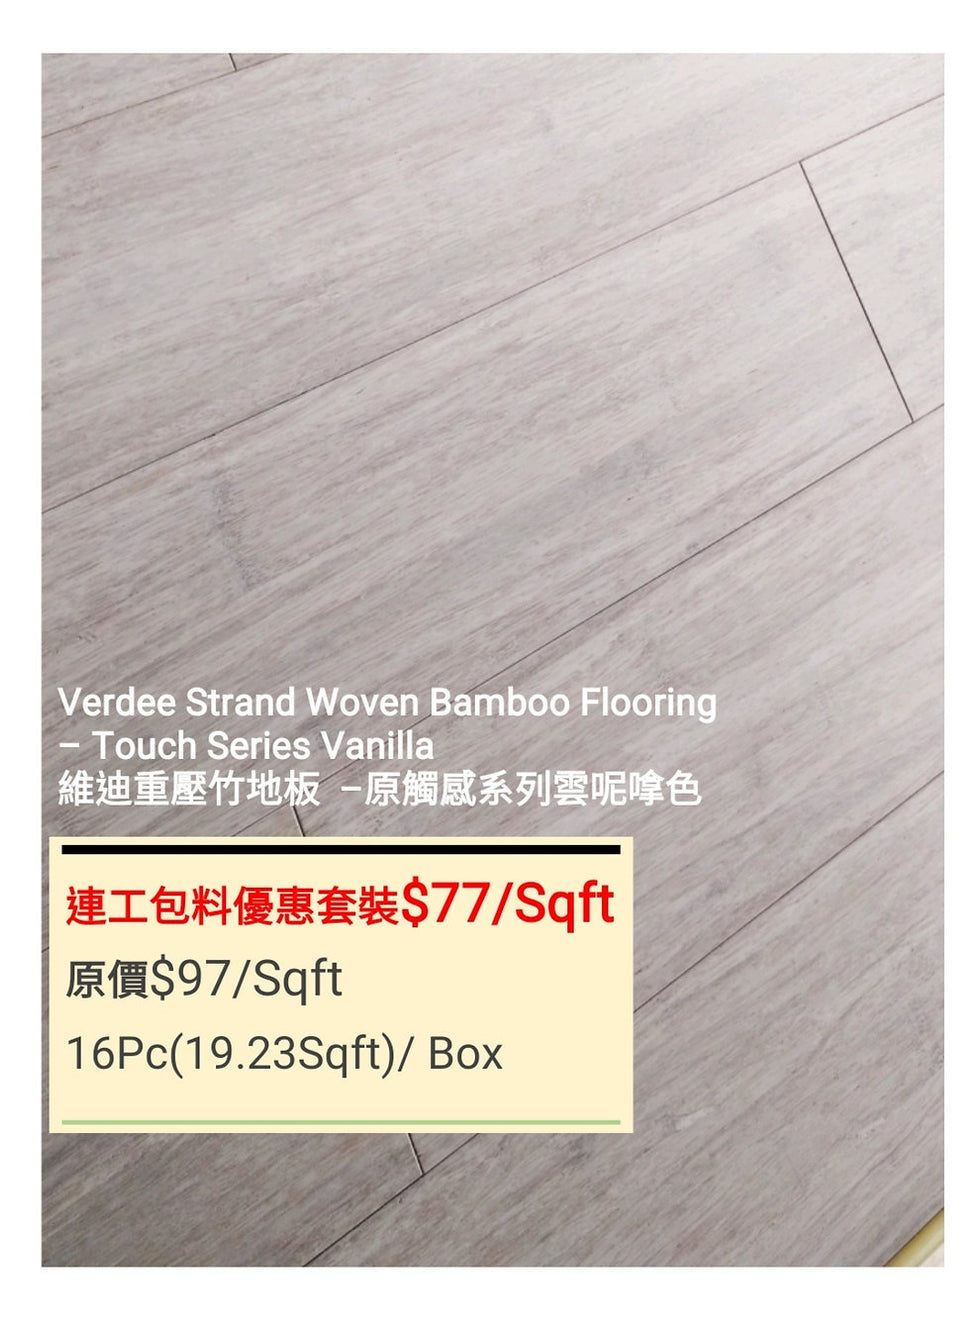 VERDEE Strand Woven Bamboo Flooring - TOUCH Series (Vanilla)